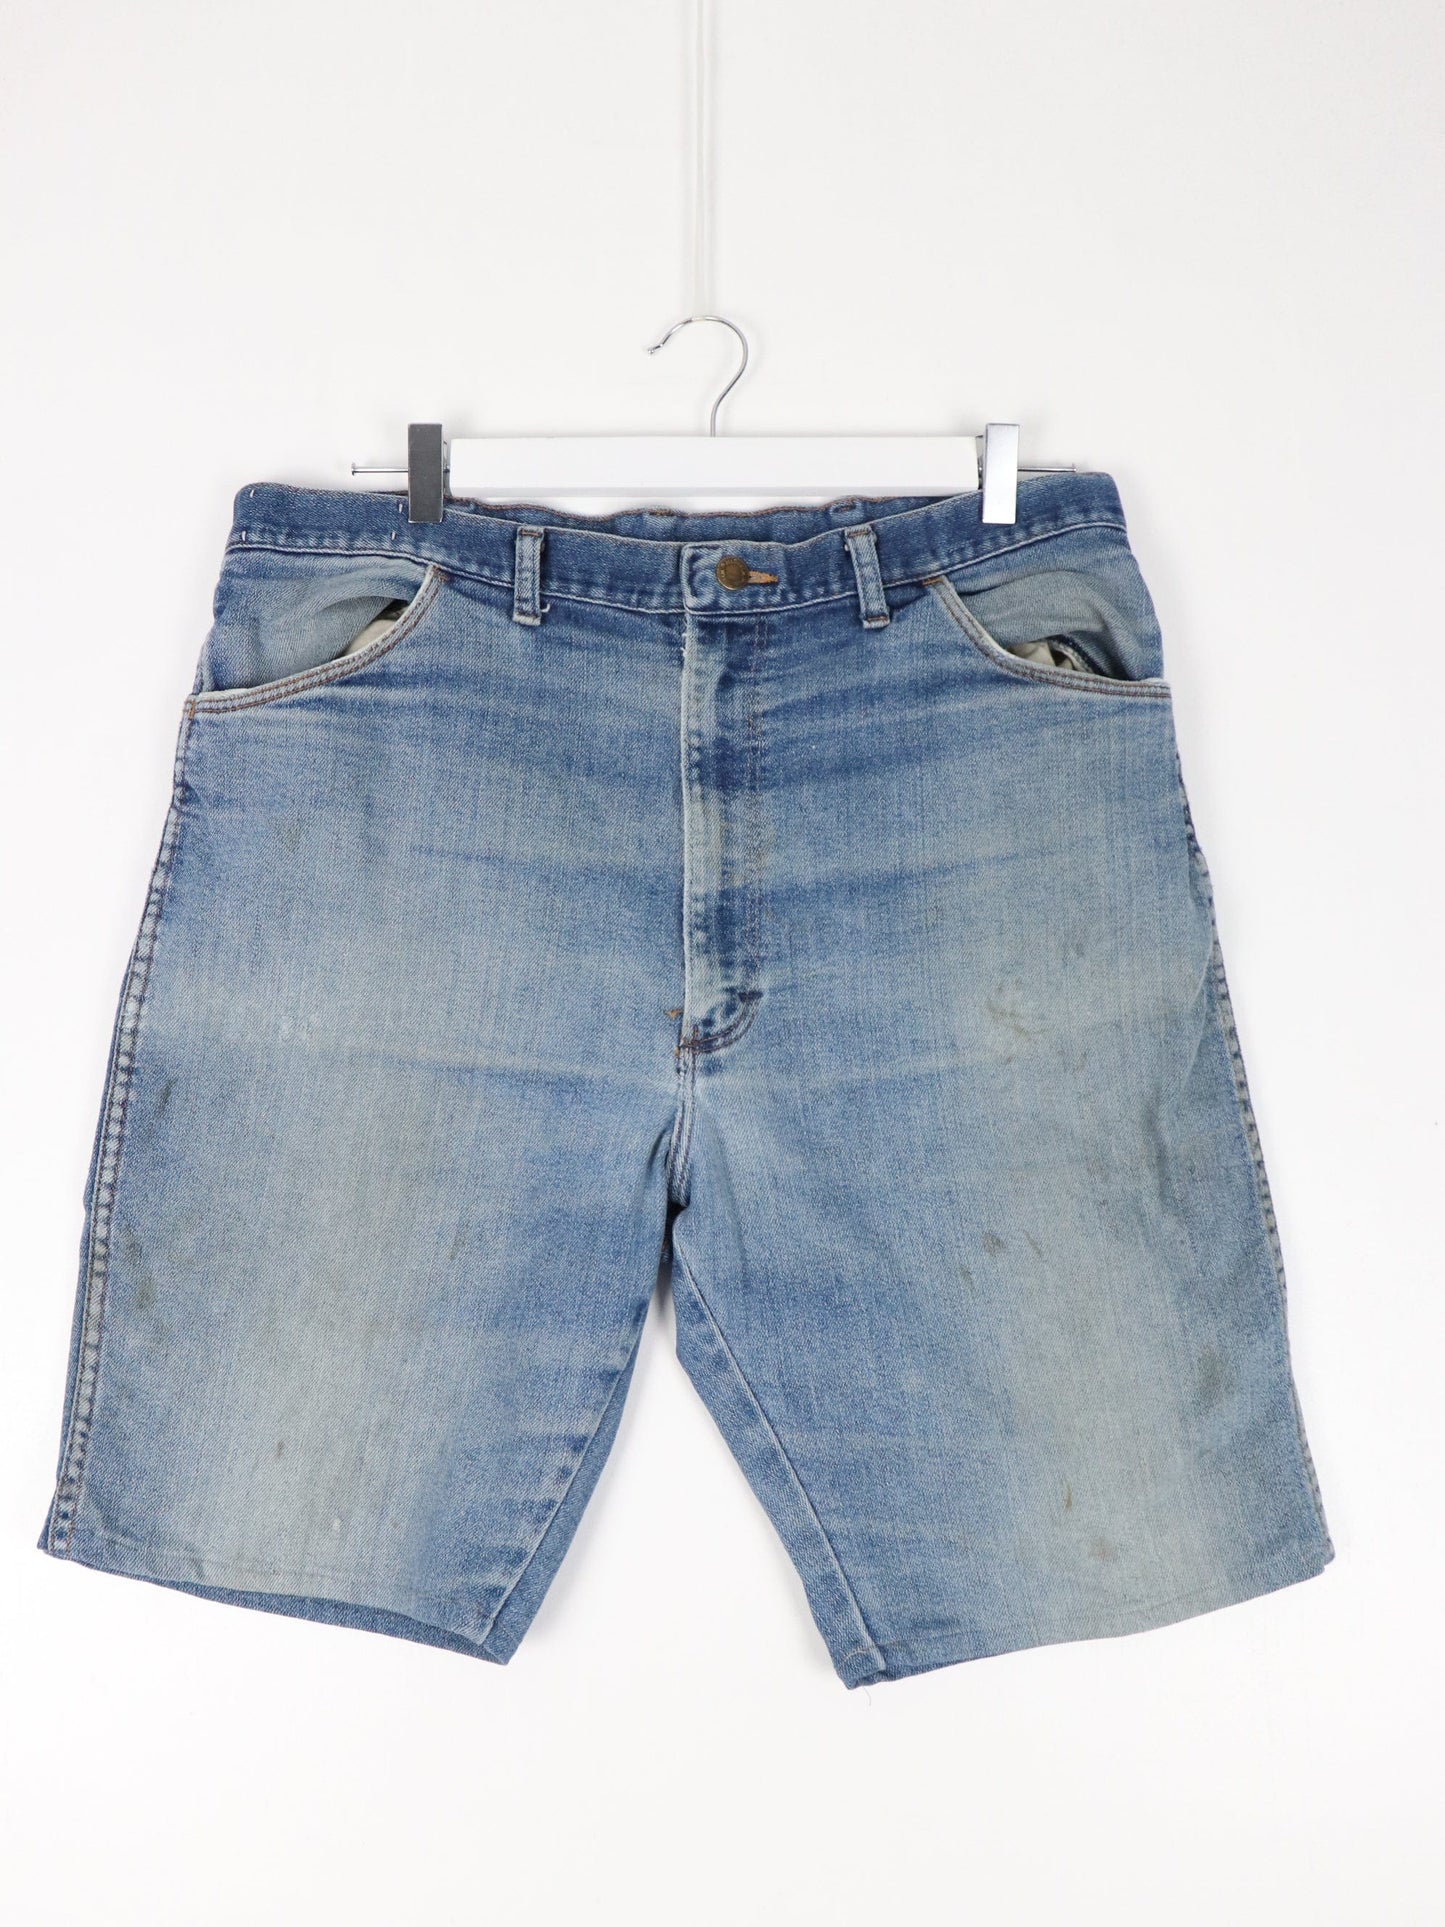 Wrangler Shorts Vintage Wrangler Shorts Fits Mens 36 Blue Denim Jeans 90s